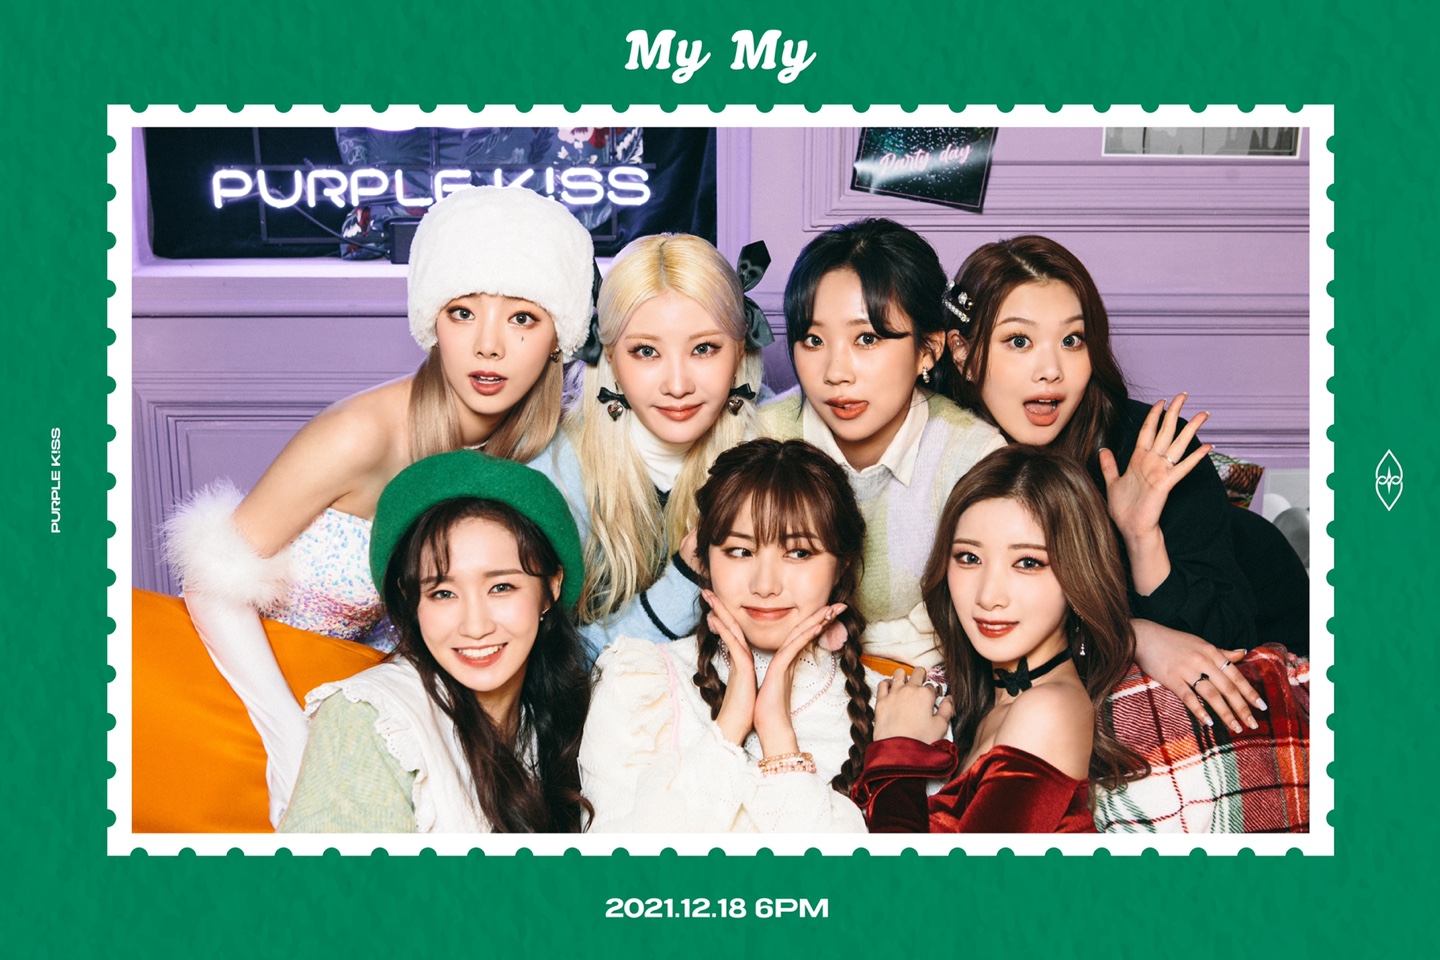 PURPLE K!SS - 'My My' group photo